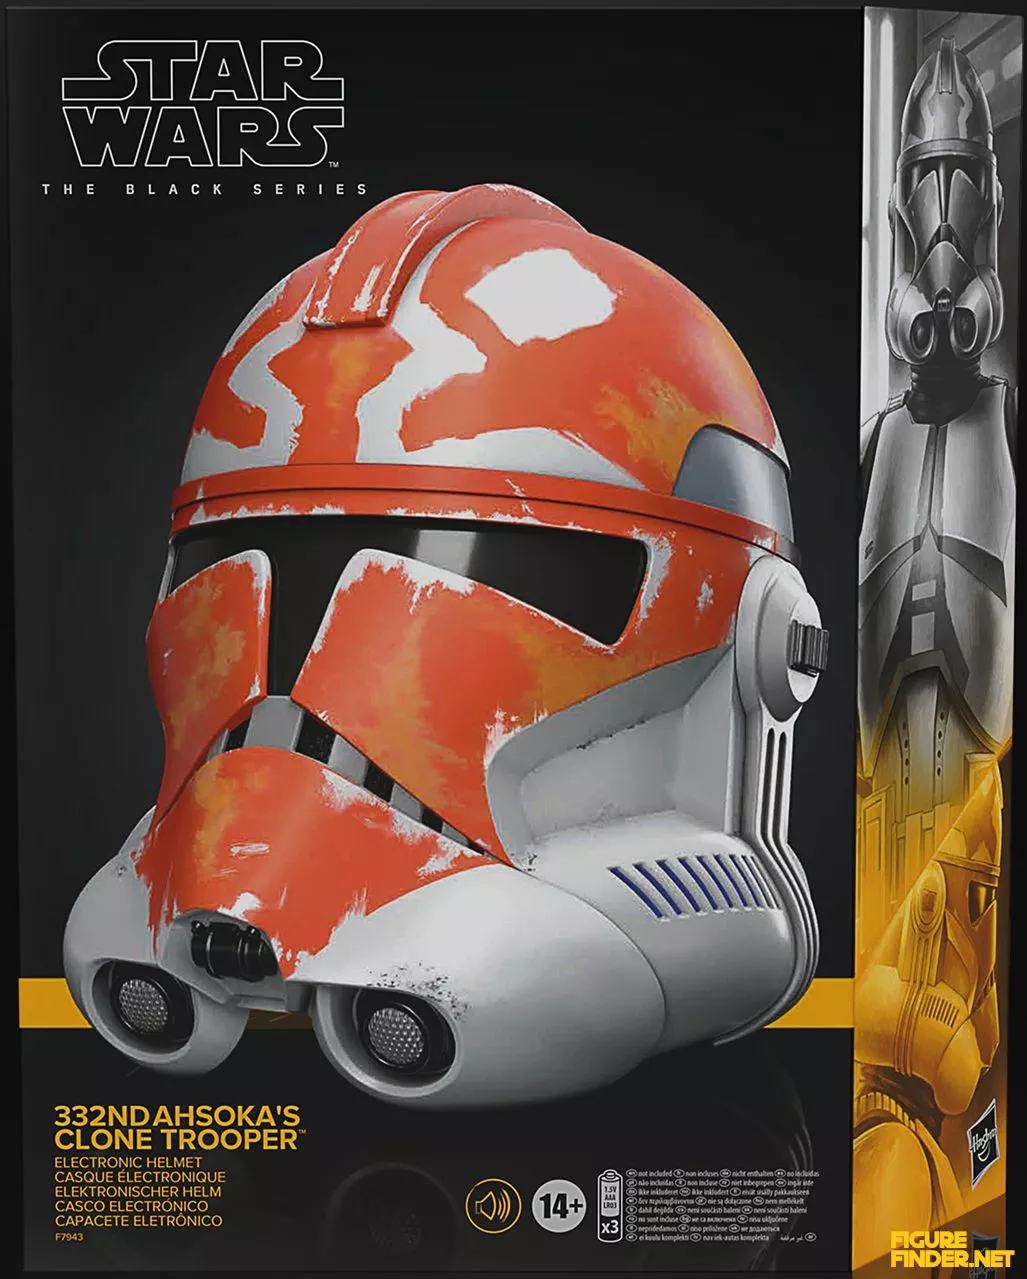  Star Wars The Black Series - 332nd Ahsoka's Clone Trooper  Premium Electronic Helmet